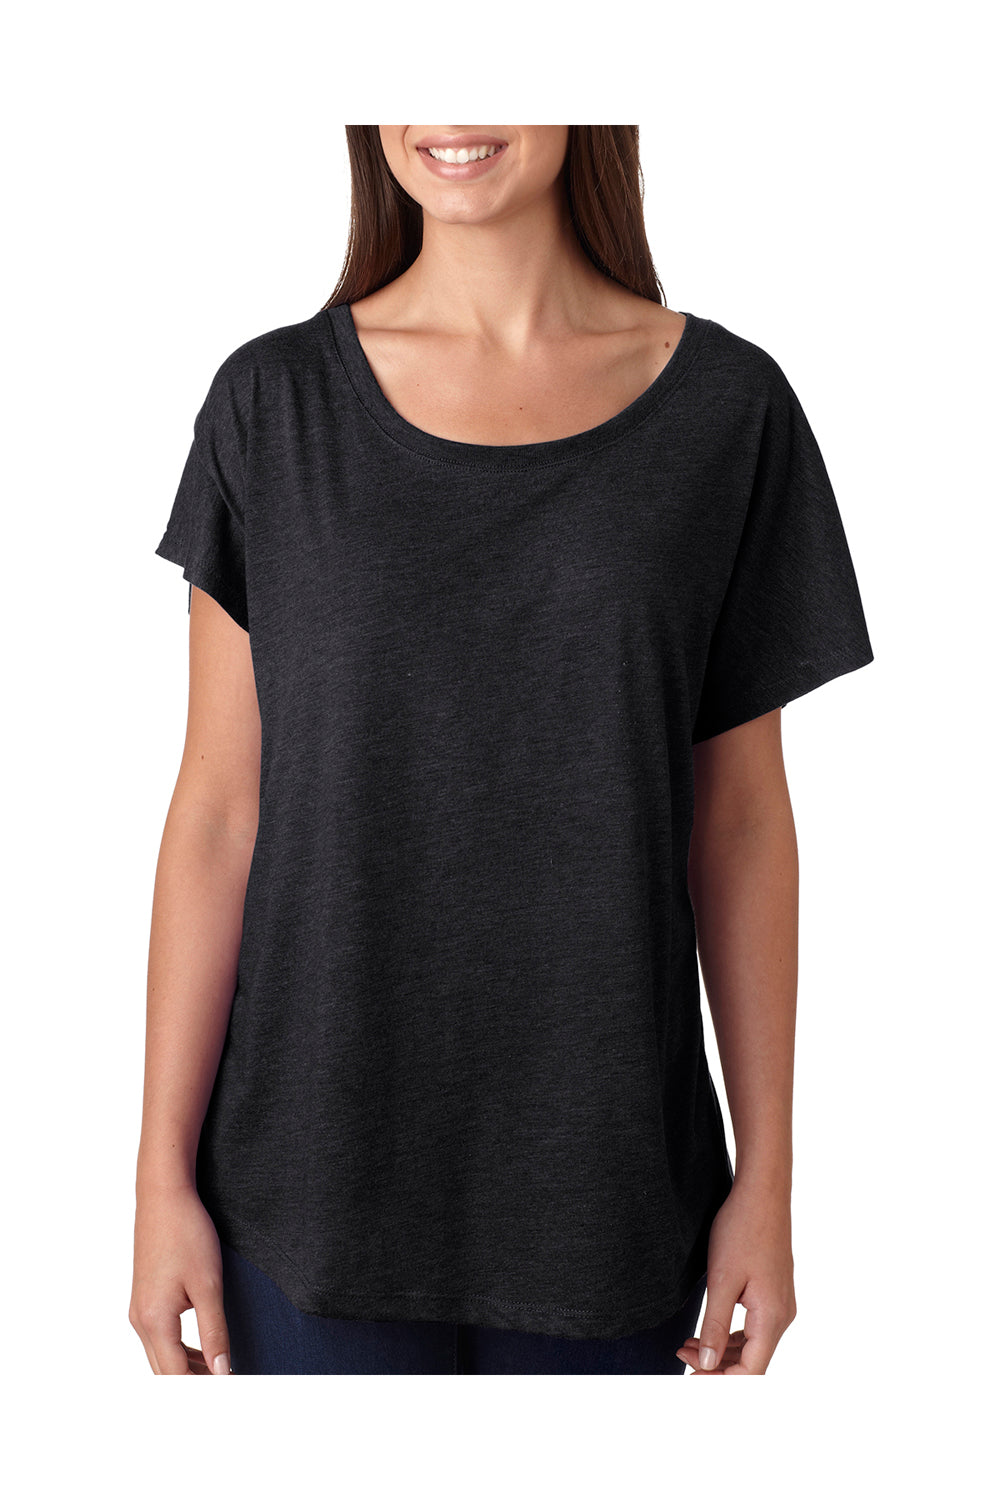 Next Level 6760 Womens Dolman Jersey Short Sleeve Scoop Neck T-Shirt Black Front